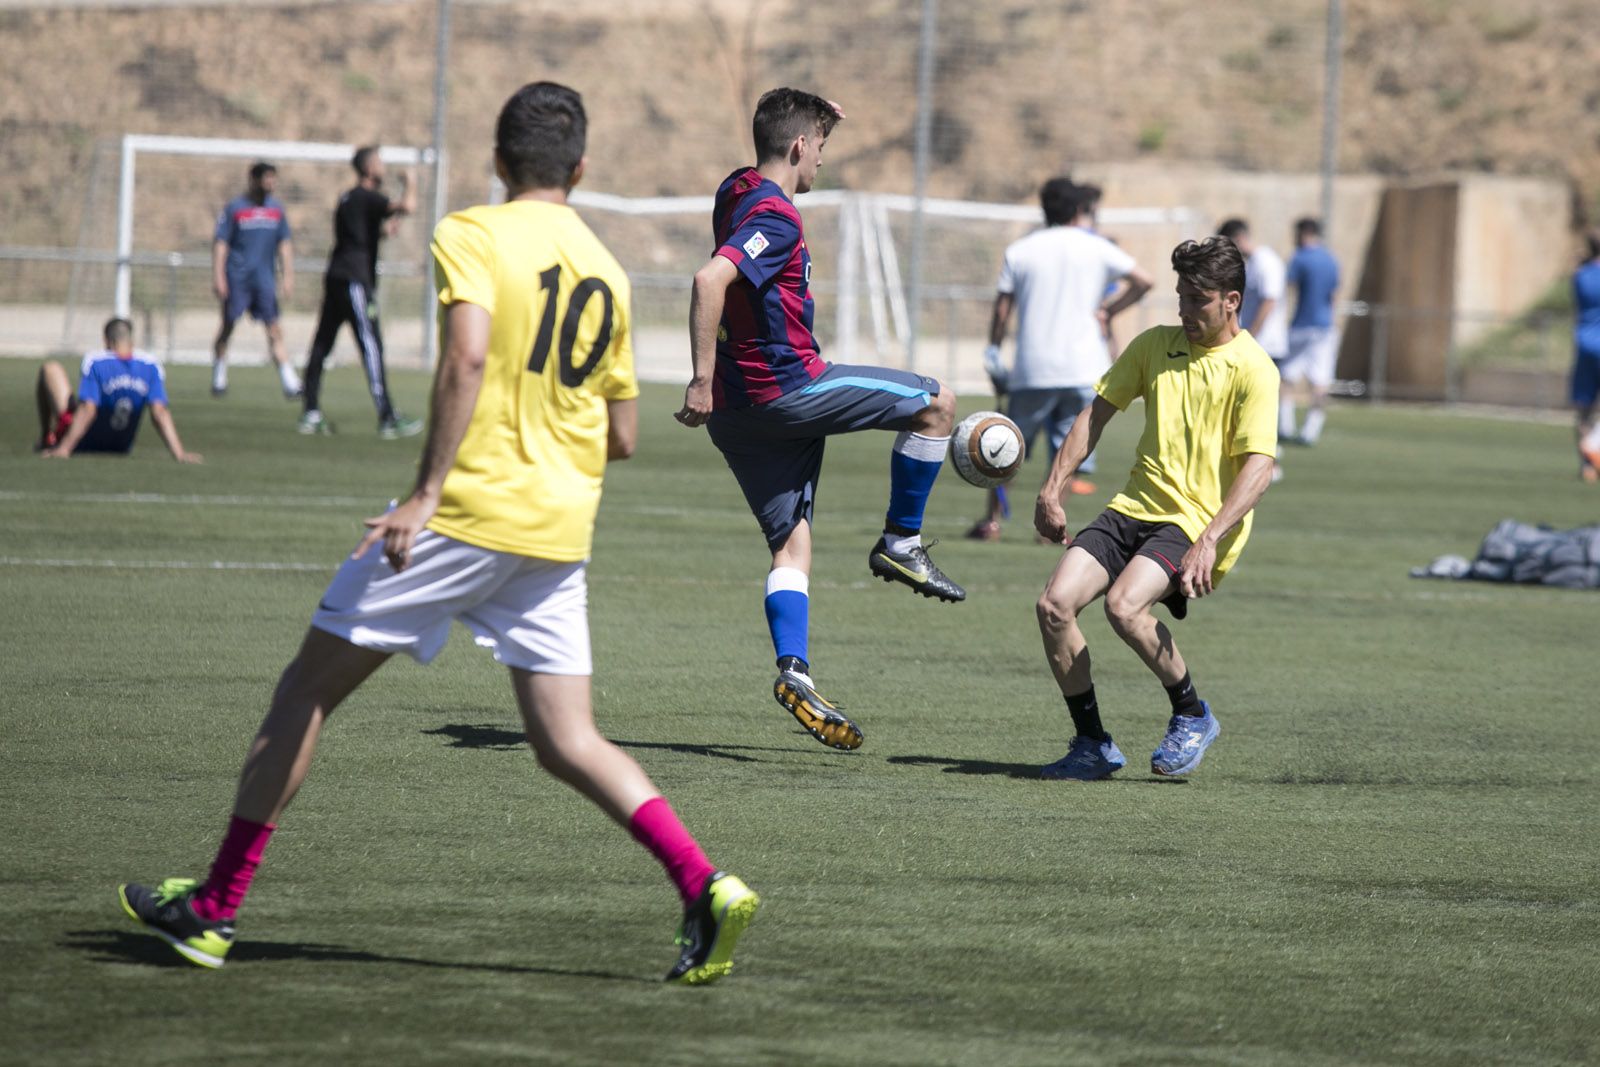 Torneig de futbol 7 a la ZEM Jaume Tubau. FOTO: Lali Puig